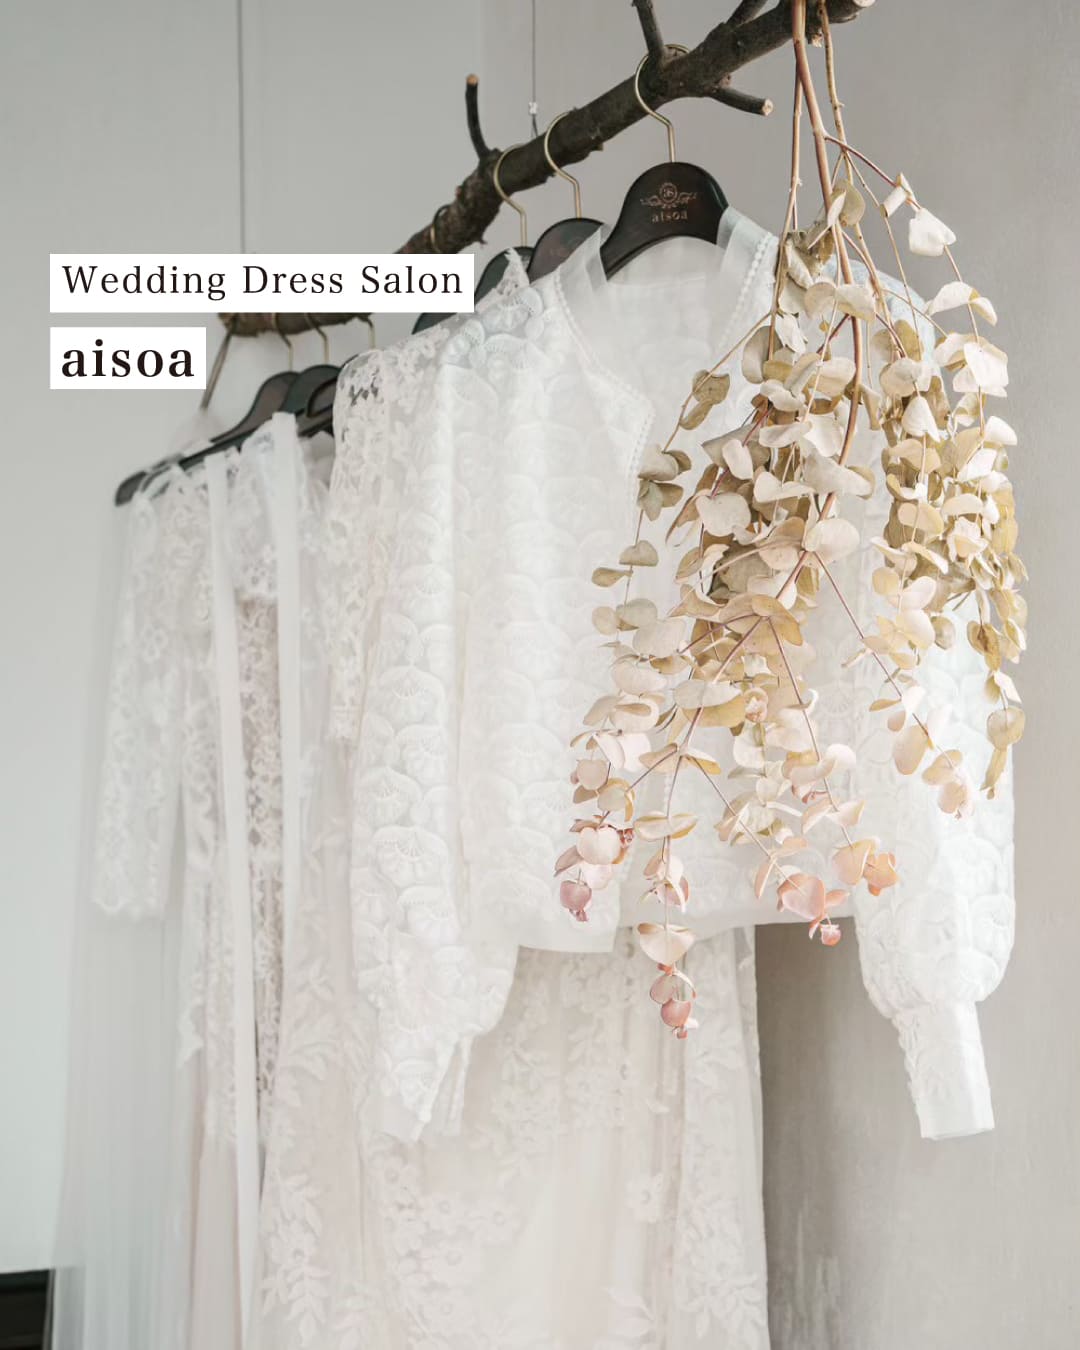 Wedding Dress Salon aisoa